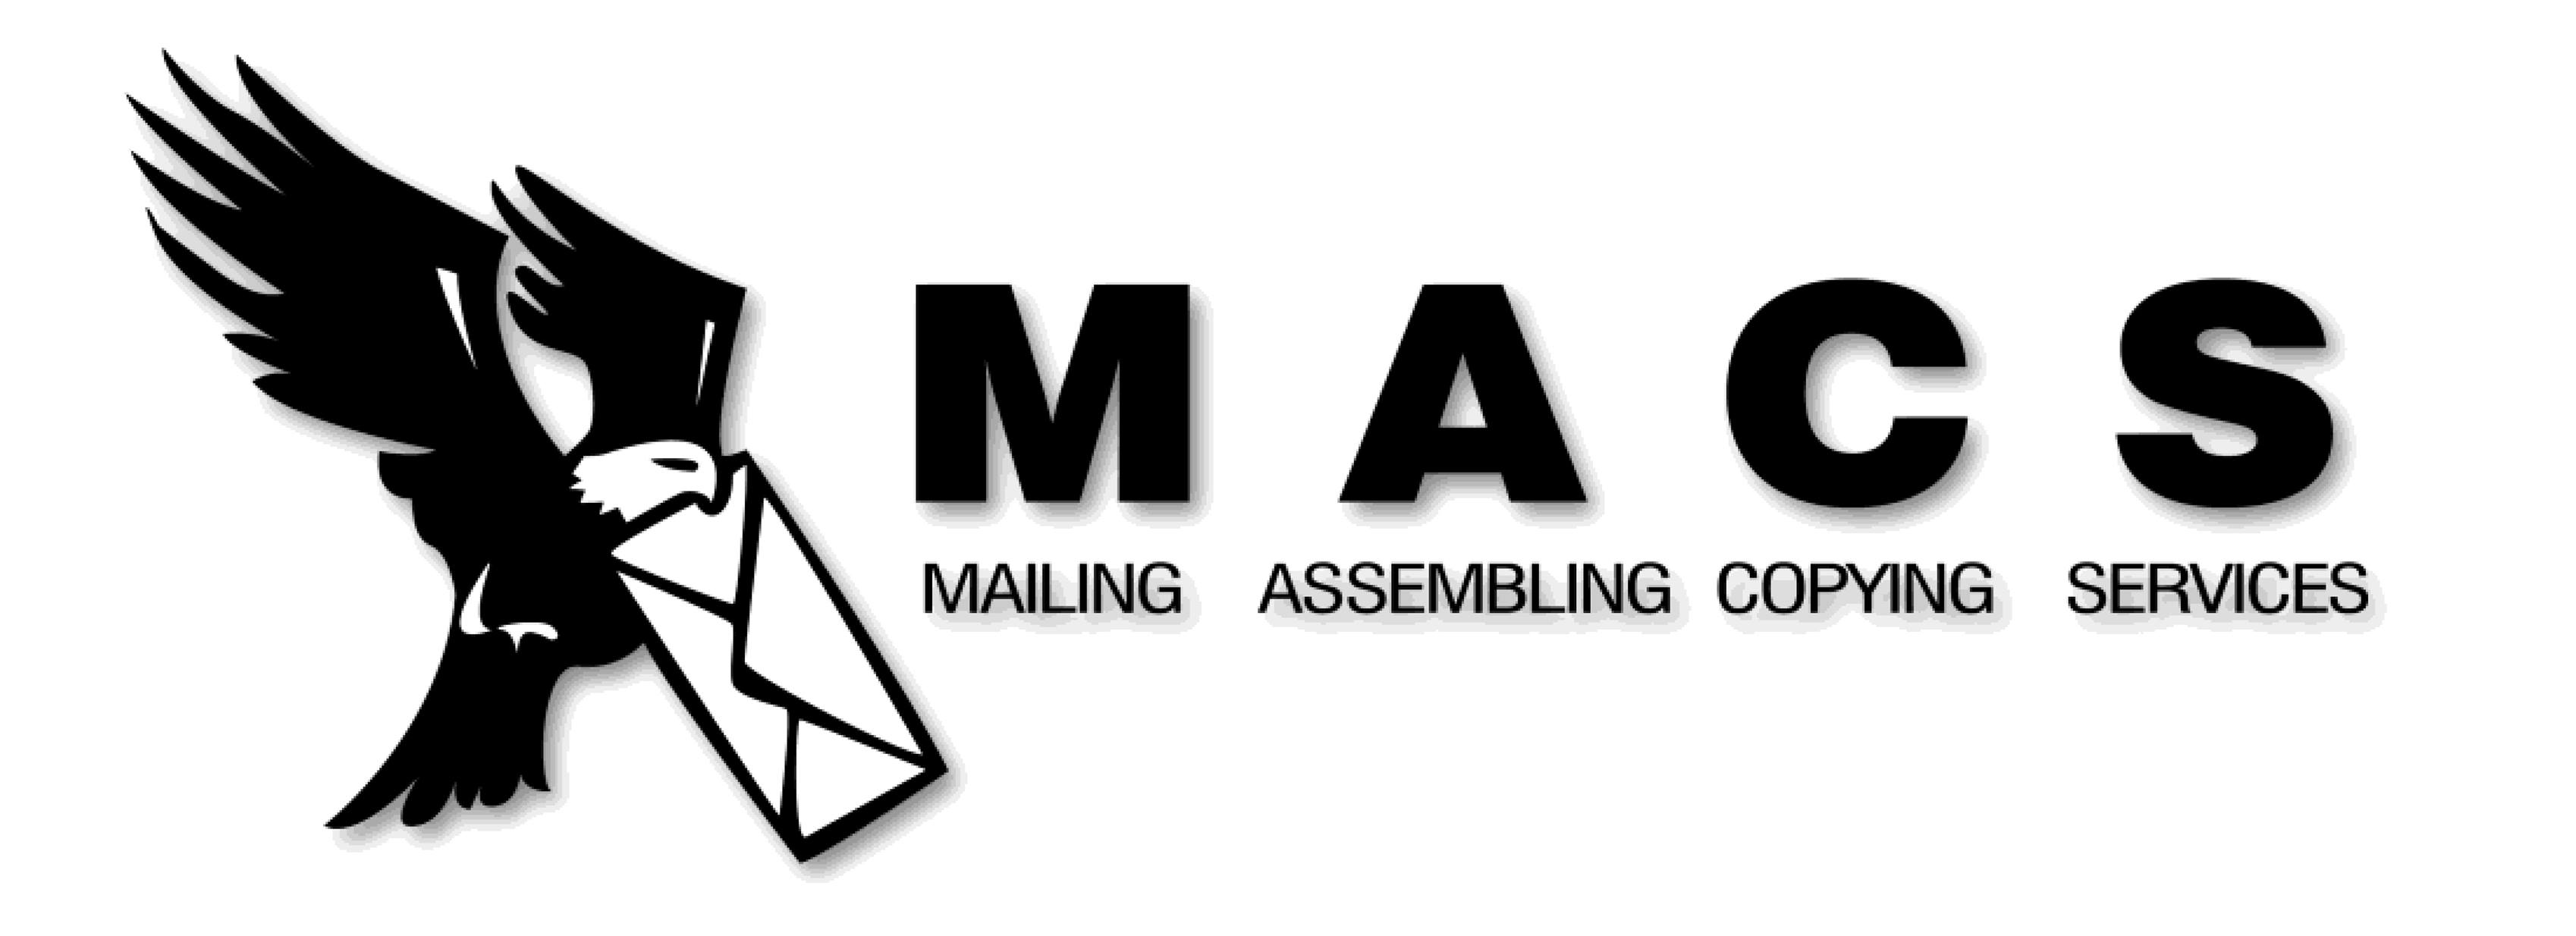 Macs Mailing Assembling Copy